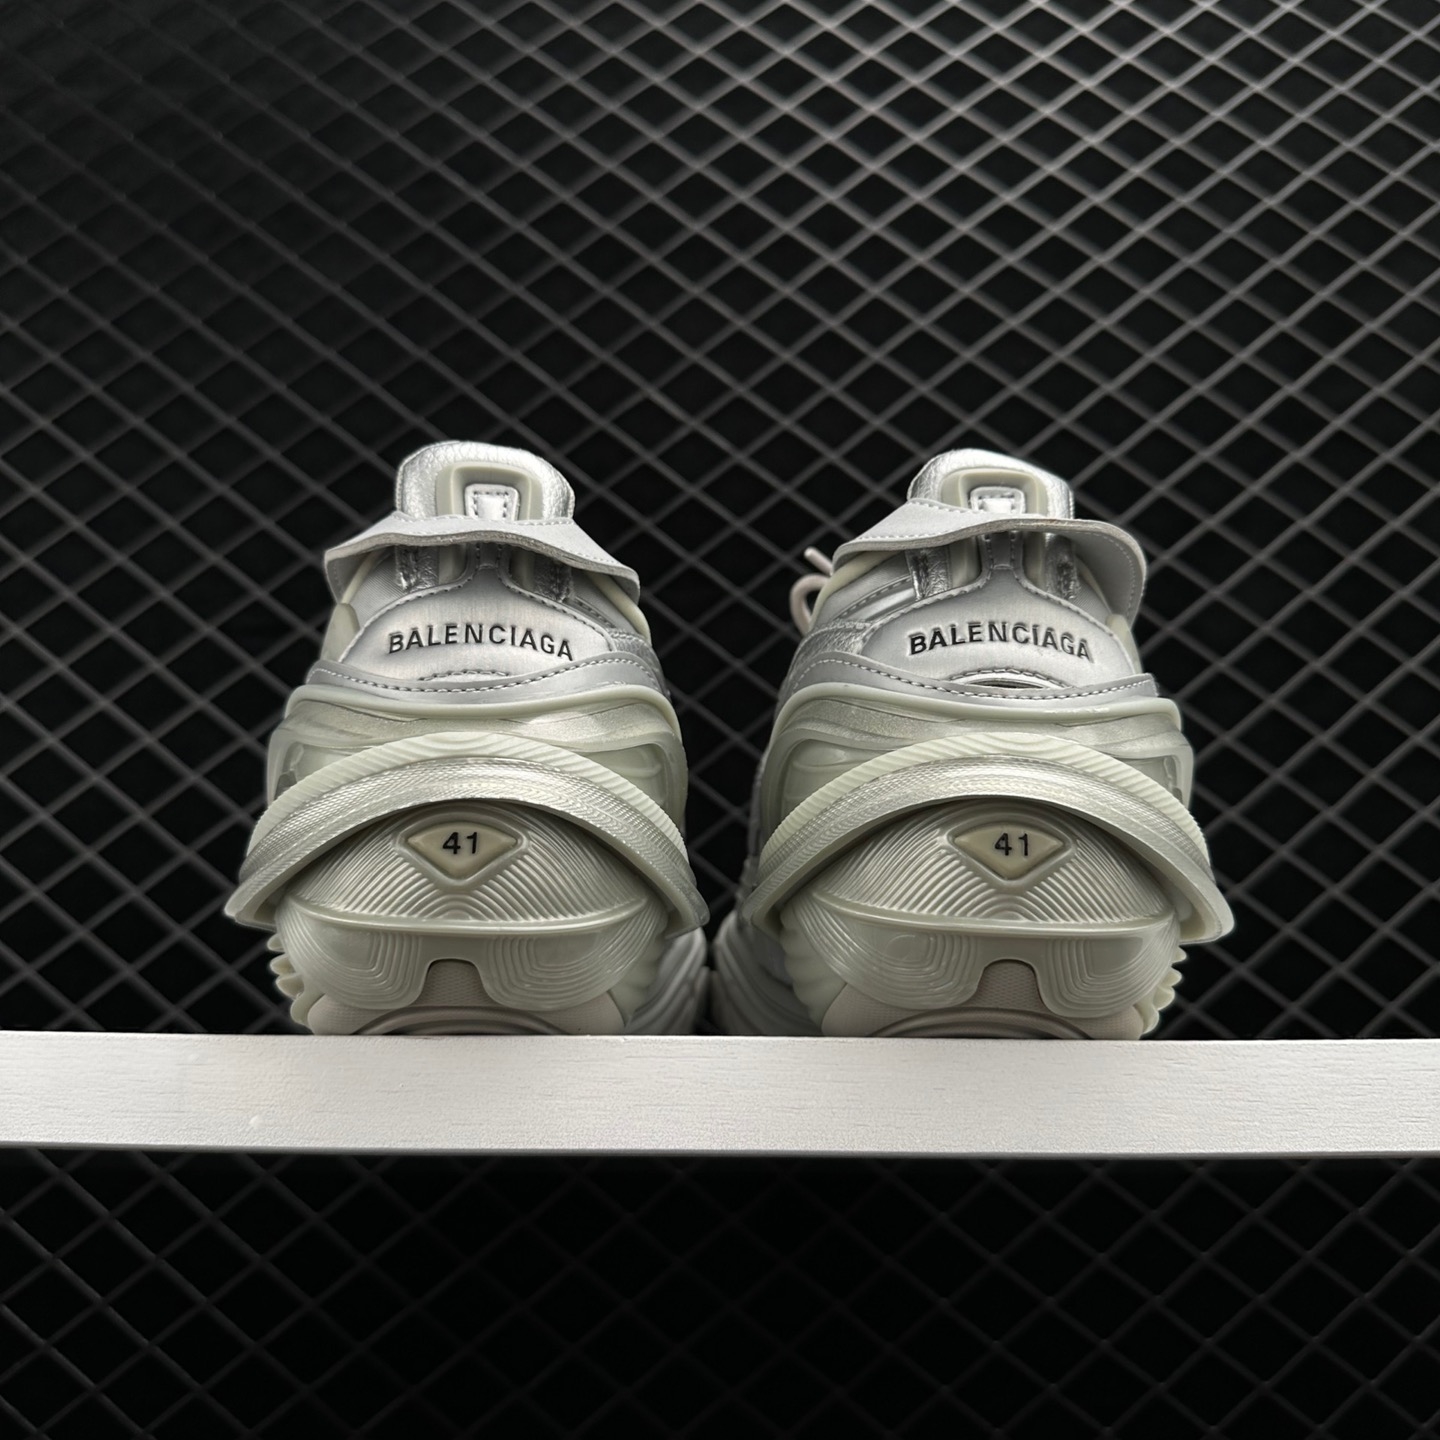 Balenciaga Wmns Tyrex Low 'Silver' Sneakers - Premium Quality Footwear